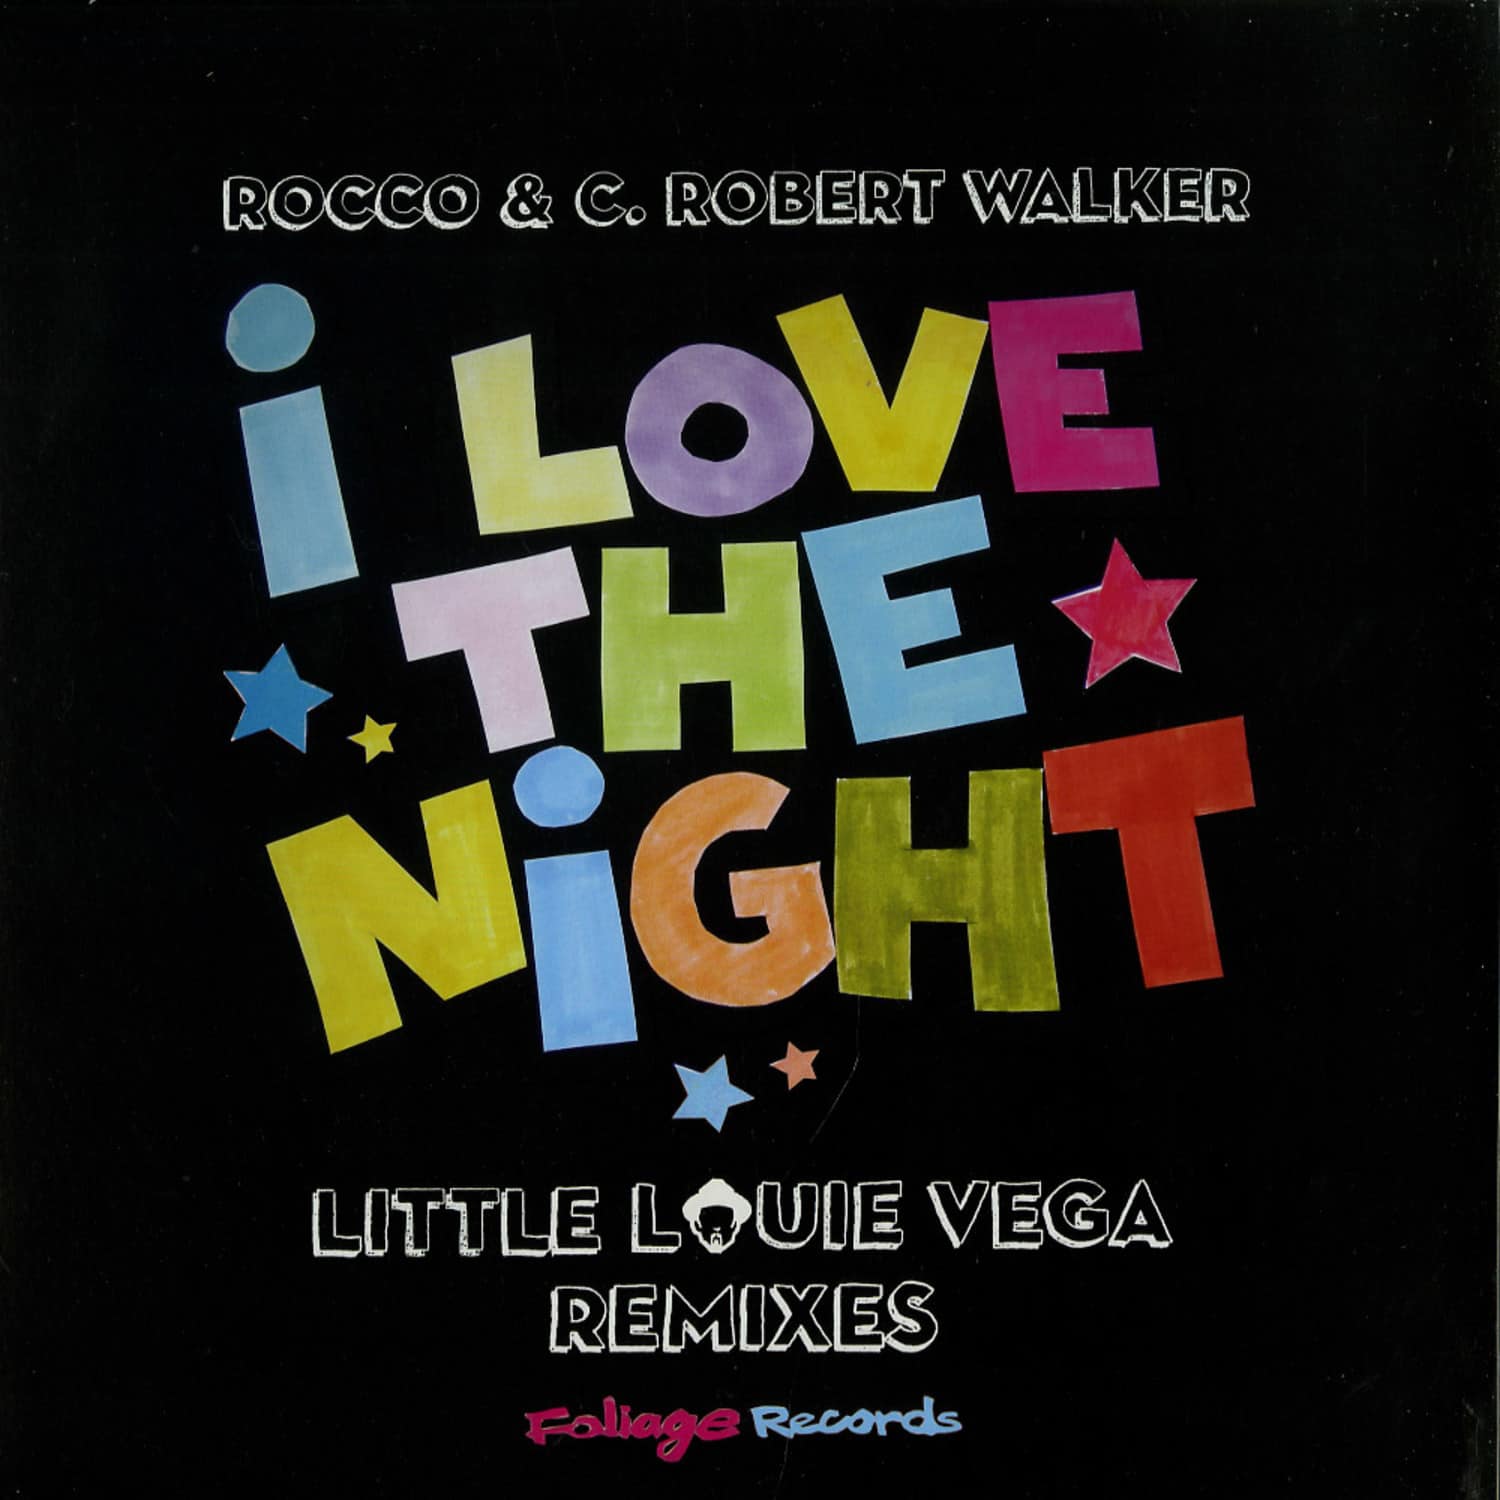 Rocco & C.Robert Walker - I LOVE THE NIGHT - LITTLE LOUIE VEGA RMX